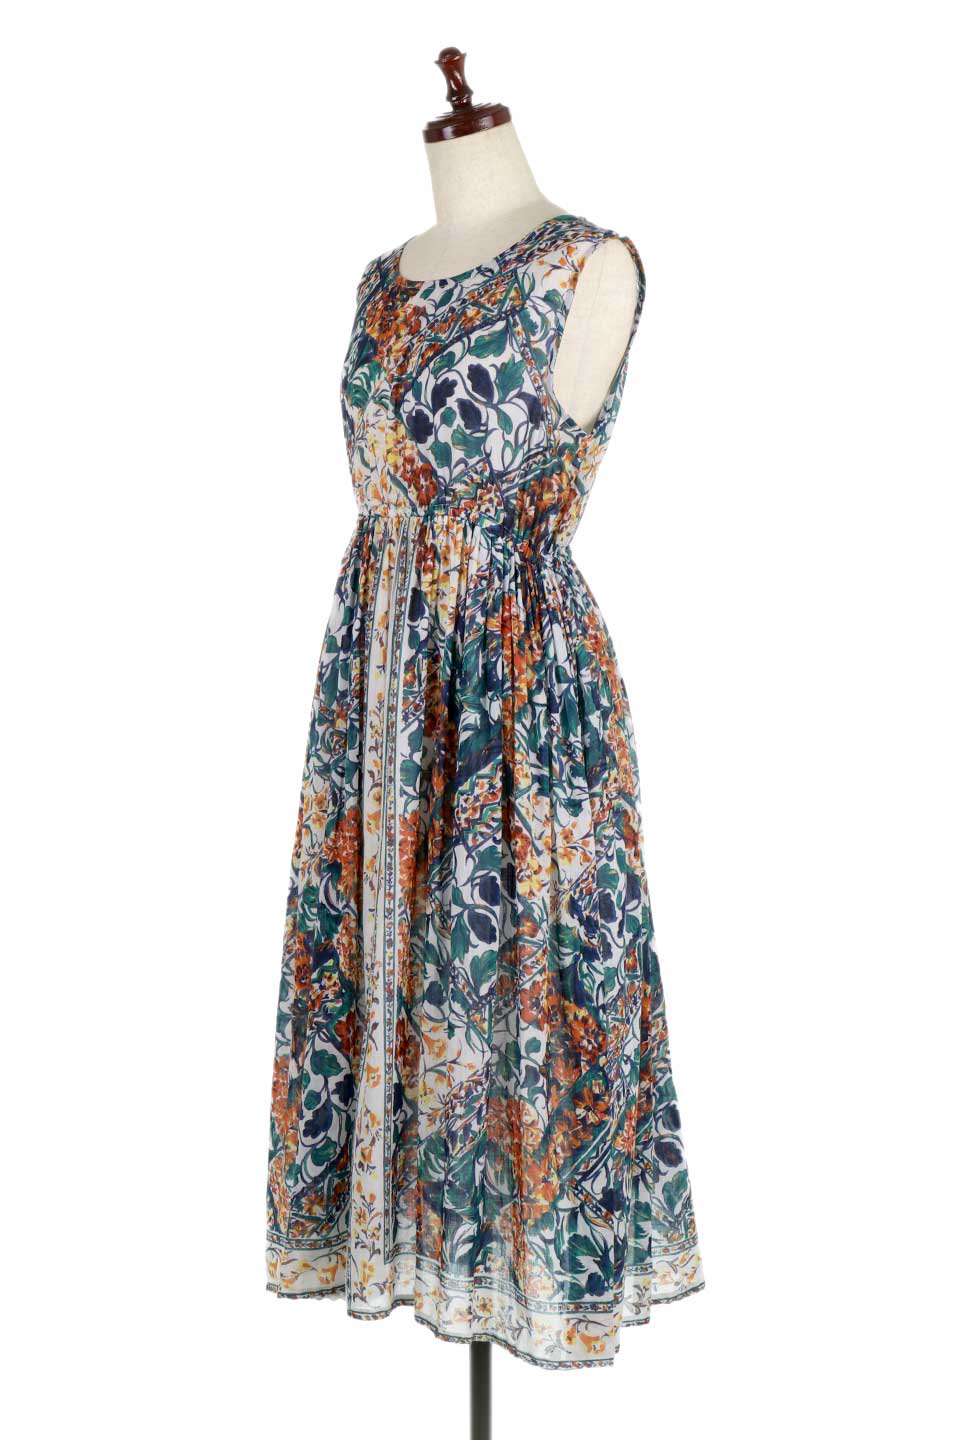 India Cotton Floral Print Dress インドコットン 花柄ワンピース 海外ファッションのインポートセレクトショップbloom